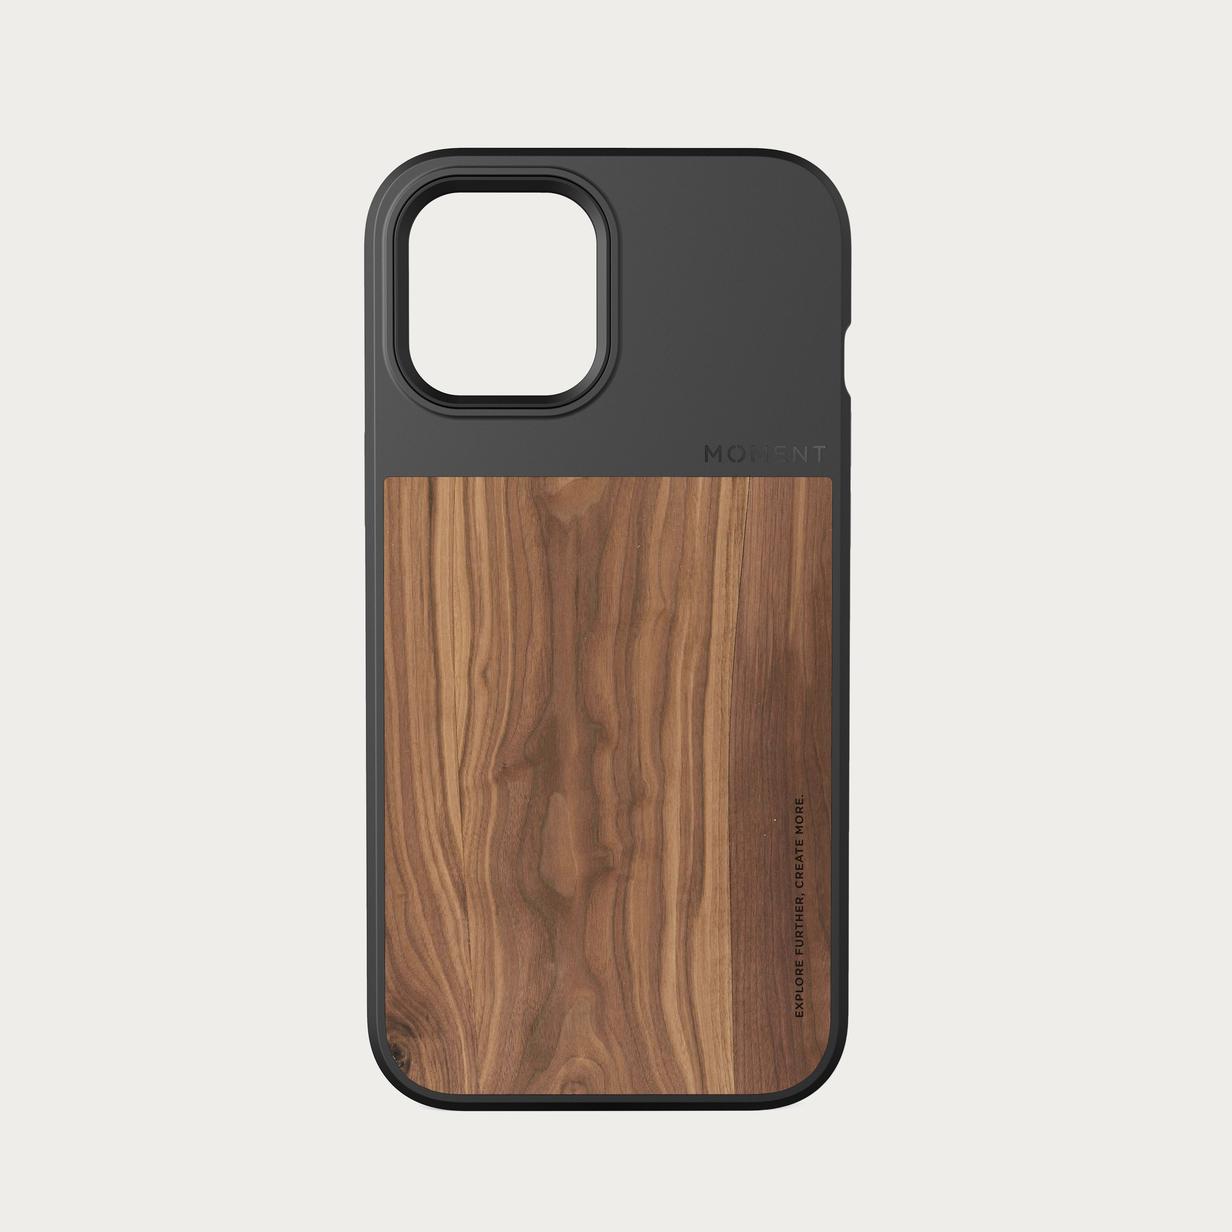 311 123 Moment i Phone12 Pro Max Case walnut wood 1